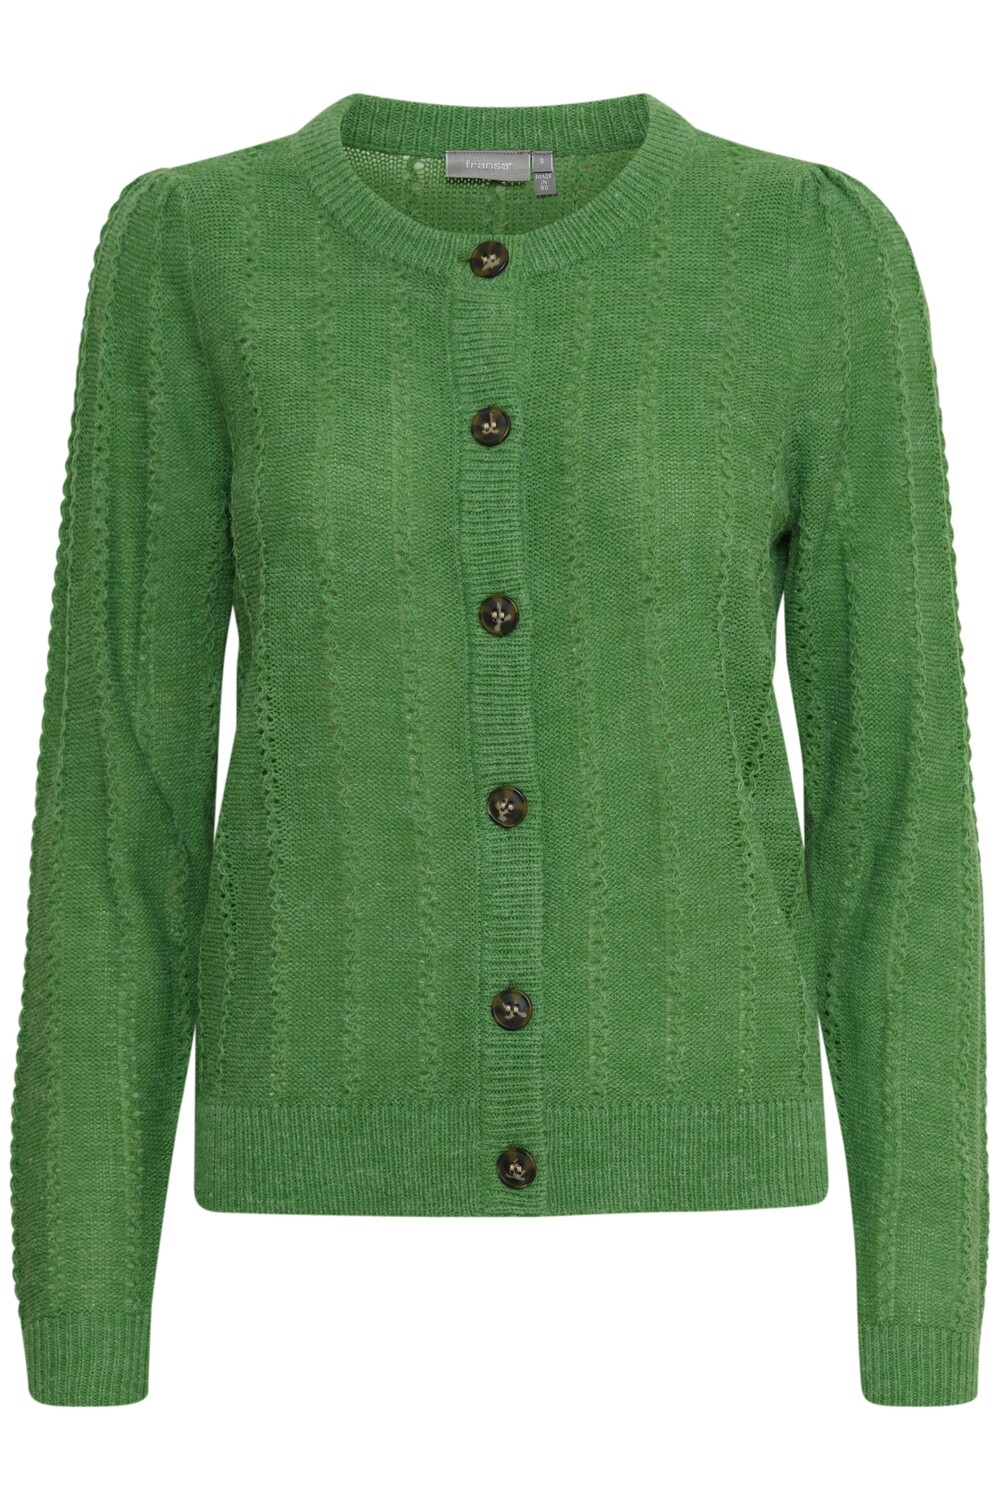 Fransa Knitted Cardigan, Online Lime Melange